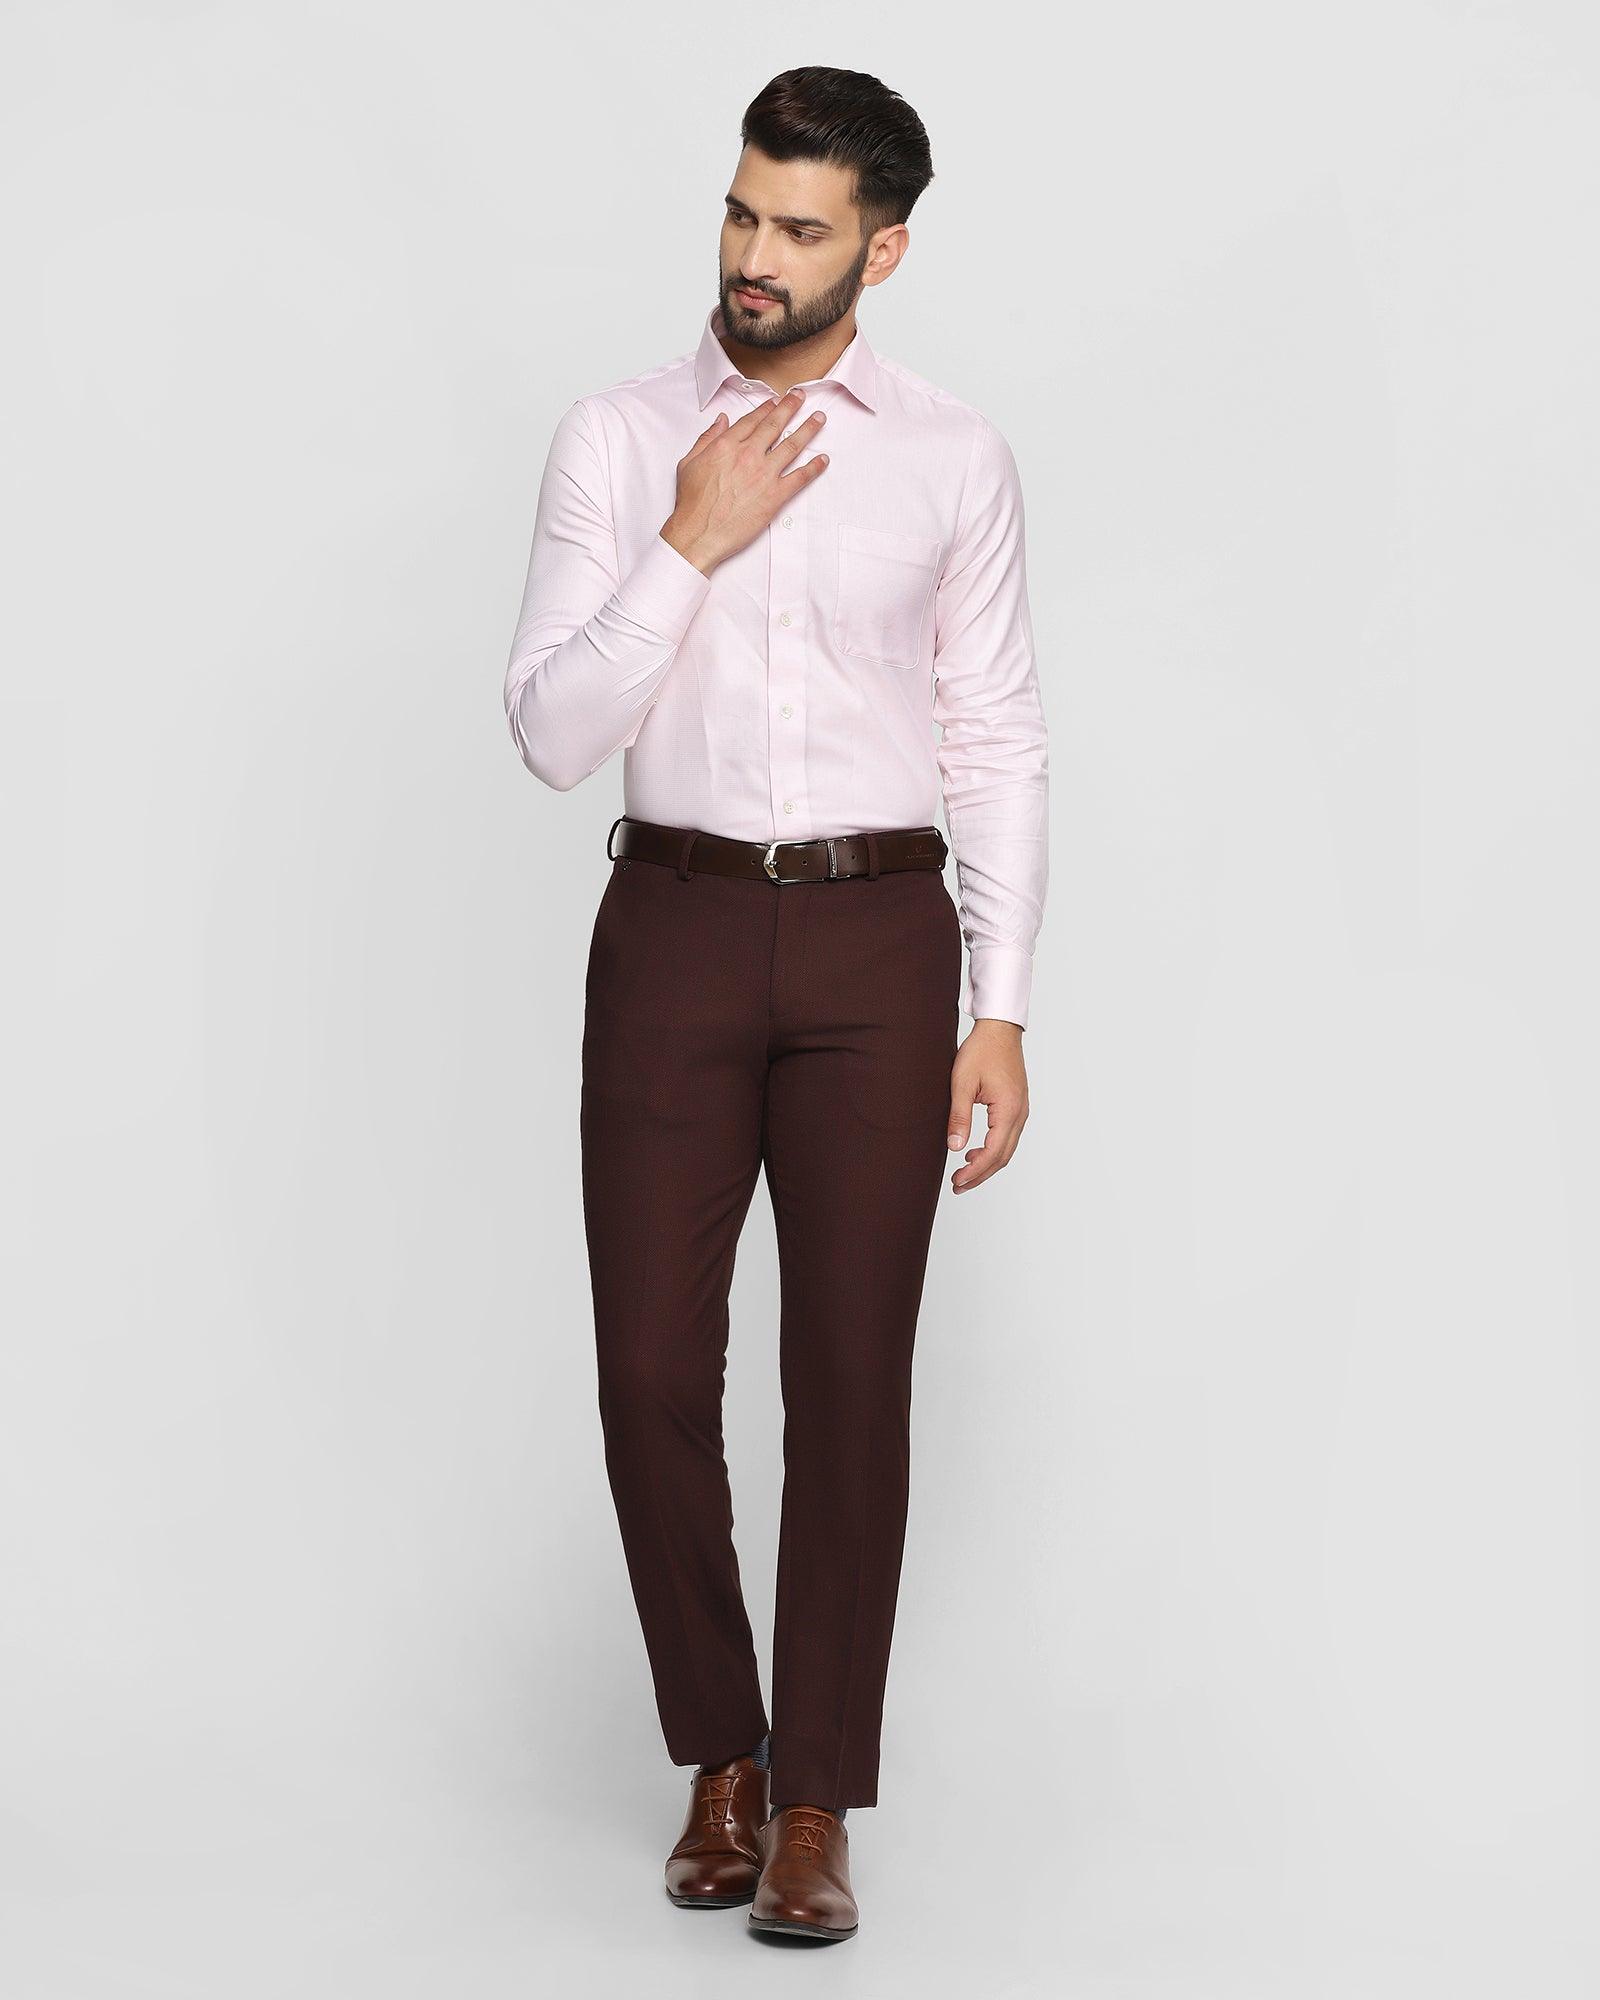 Men's Formal Trouser Slim Fit Plain Front Cross Pocket Color: E/W (GREY) -  FIT ELEGANCE